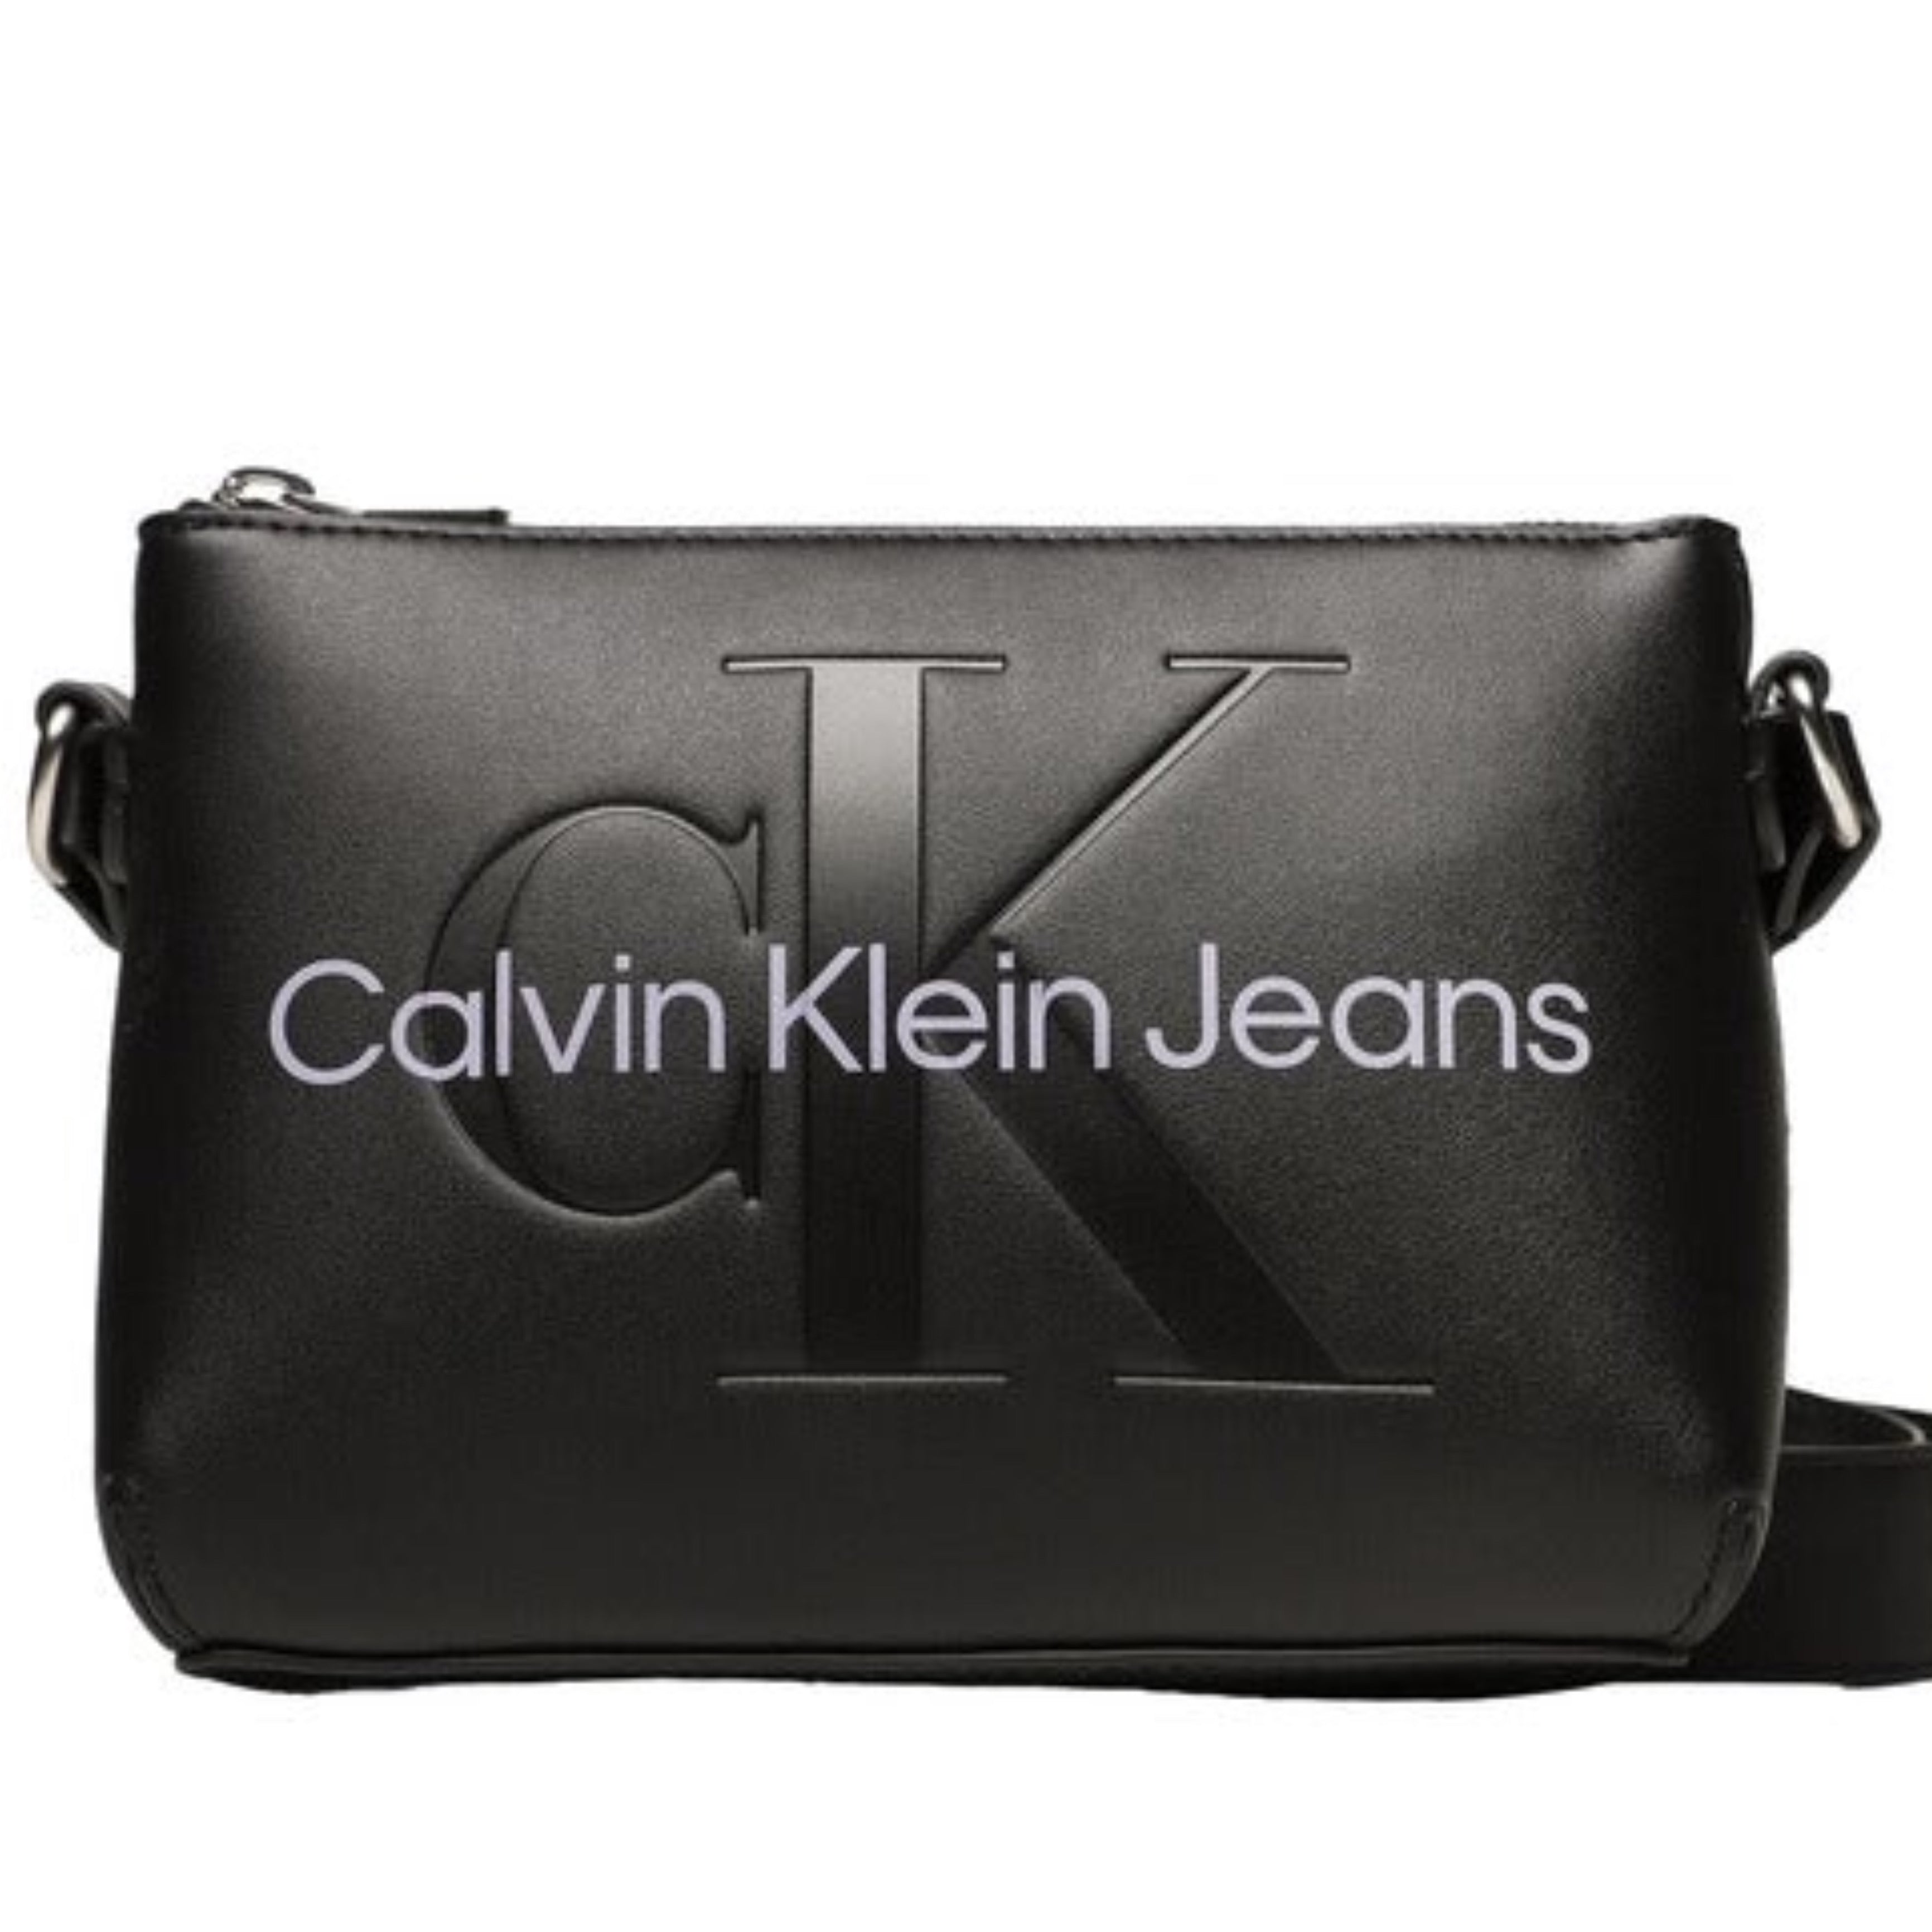 Calvin Klein Jeans Women Bag